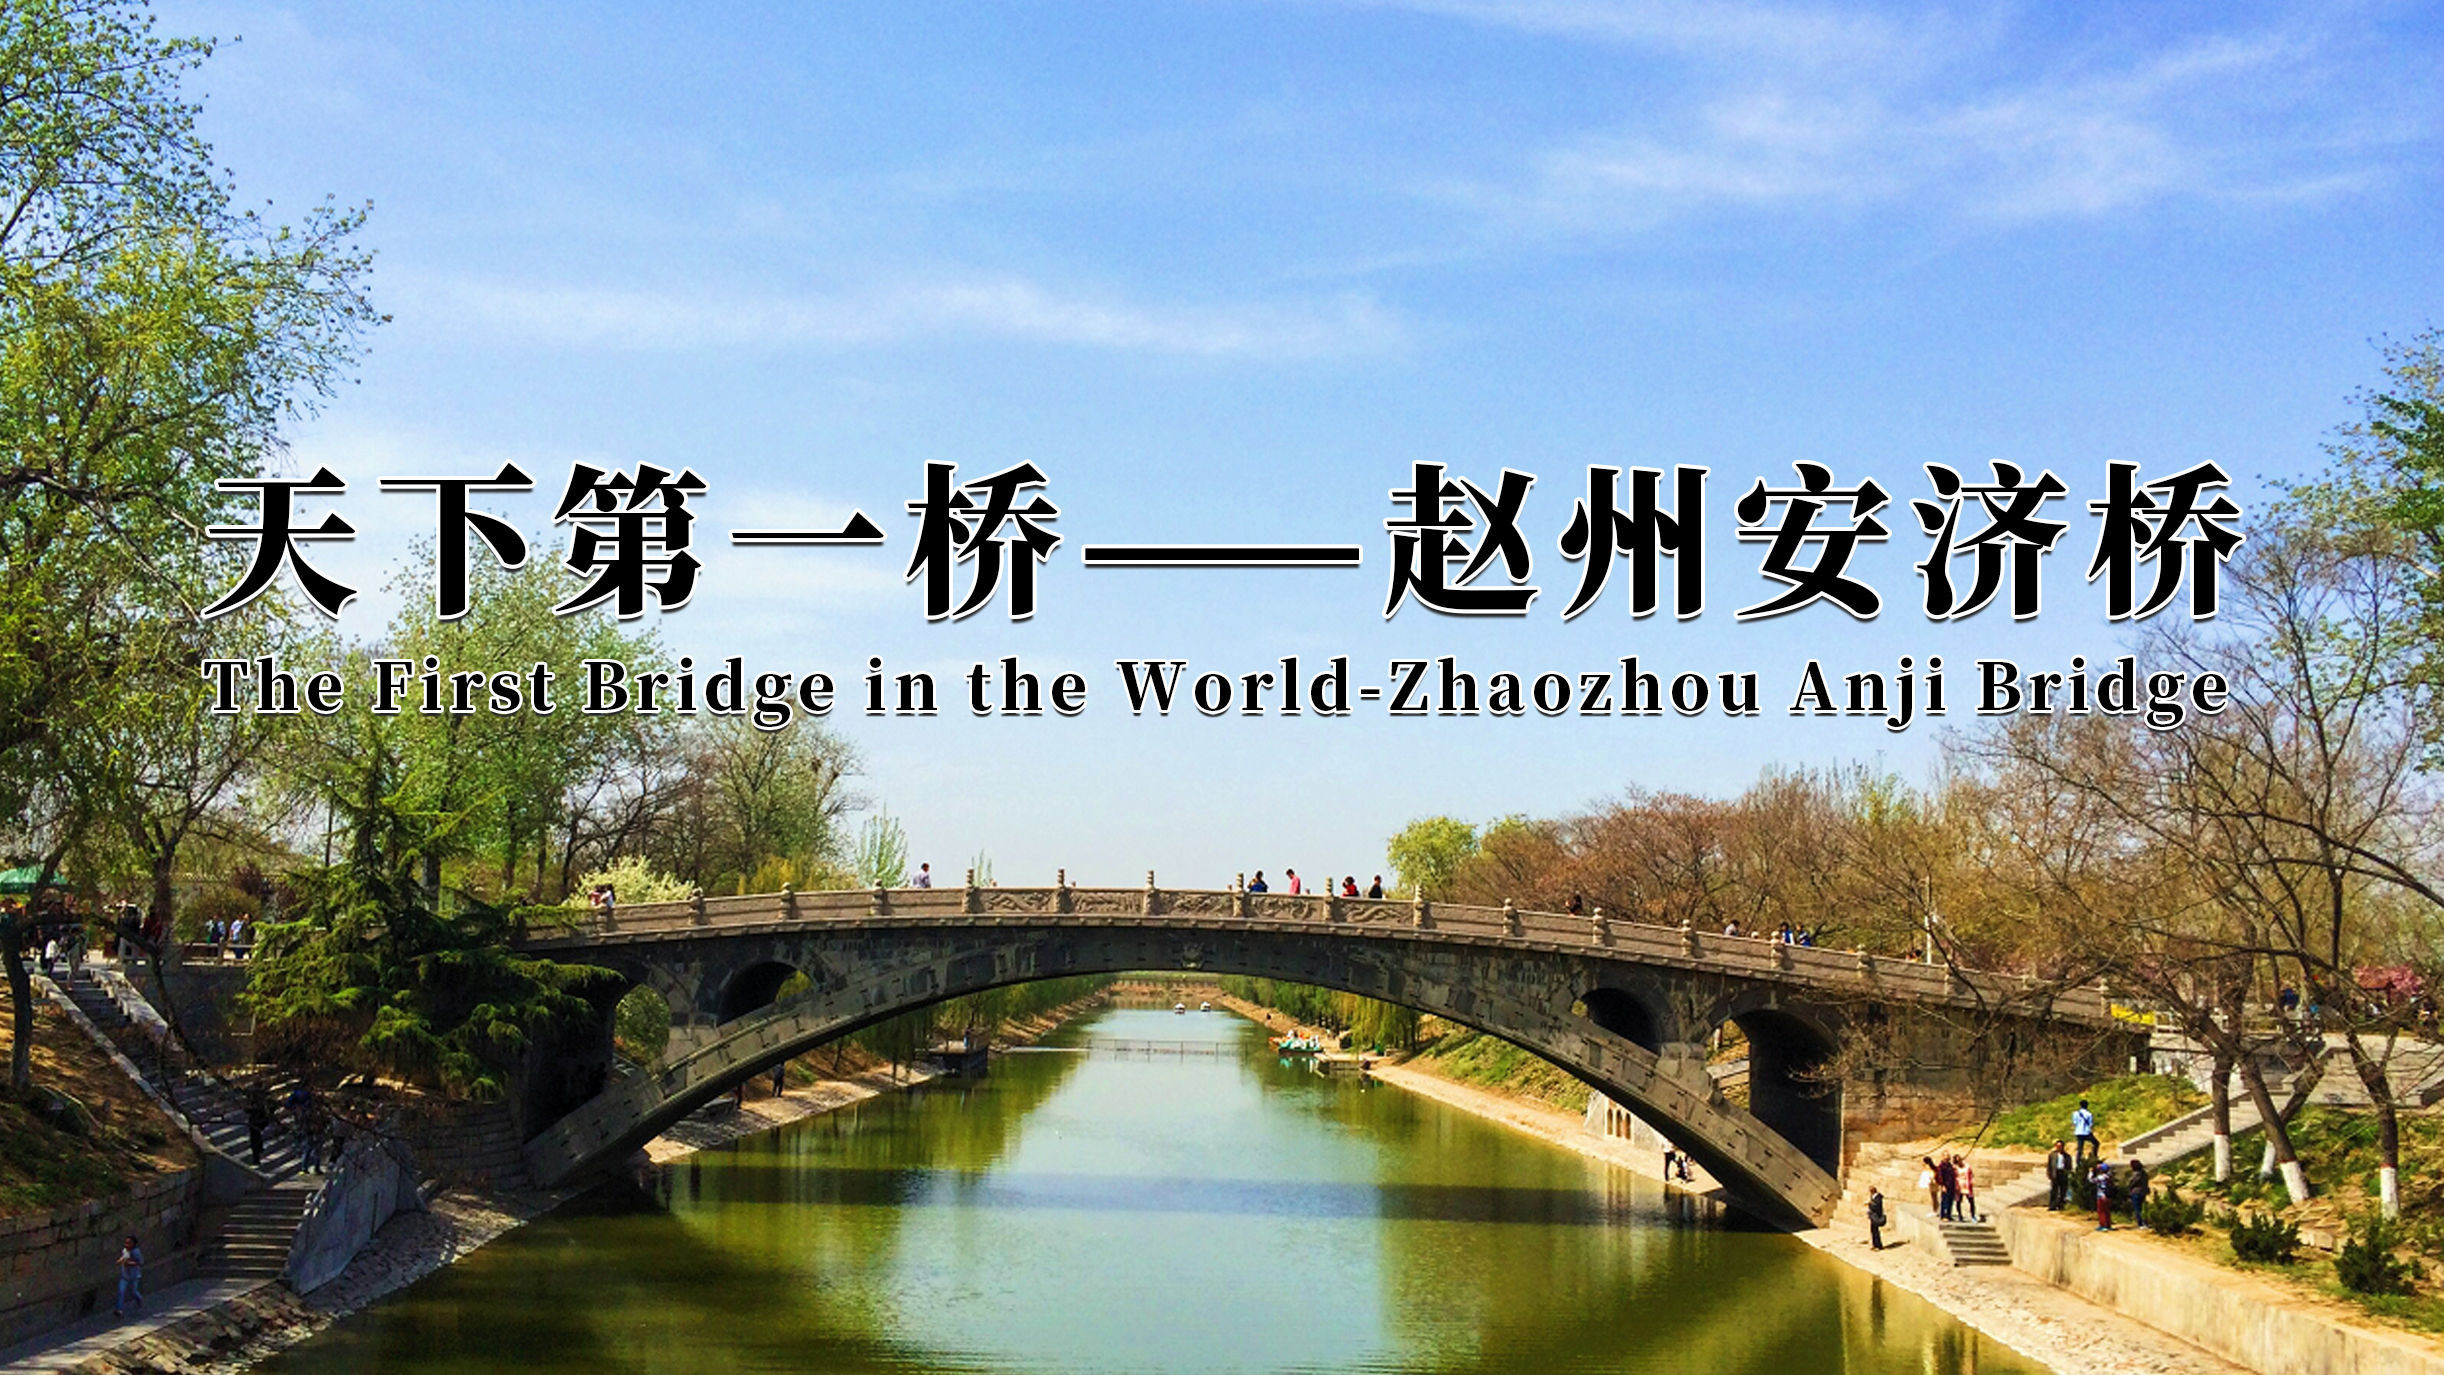 The First Bridge in the World-Zhaozhou Anji Bridge